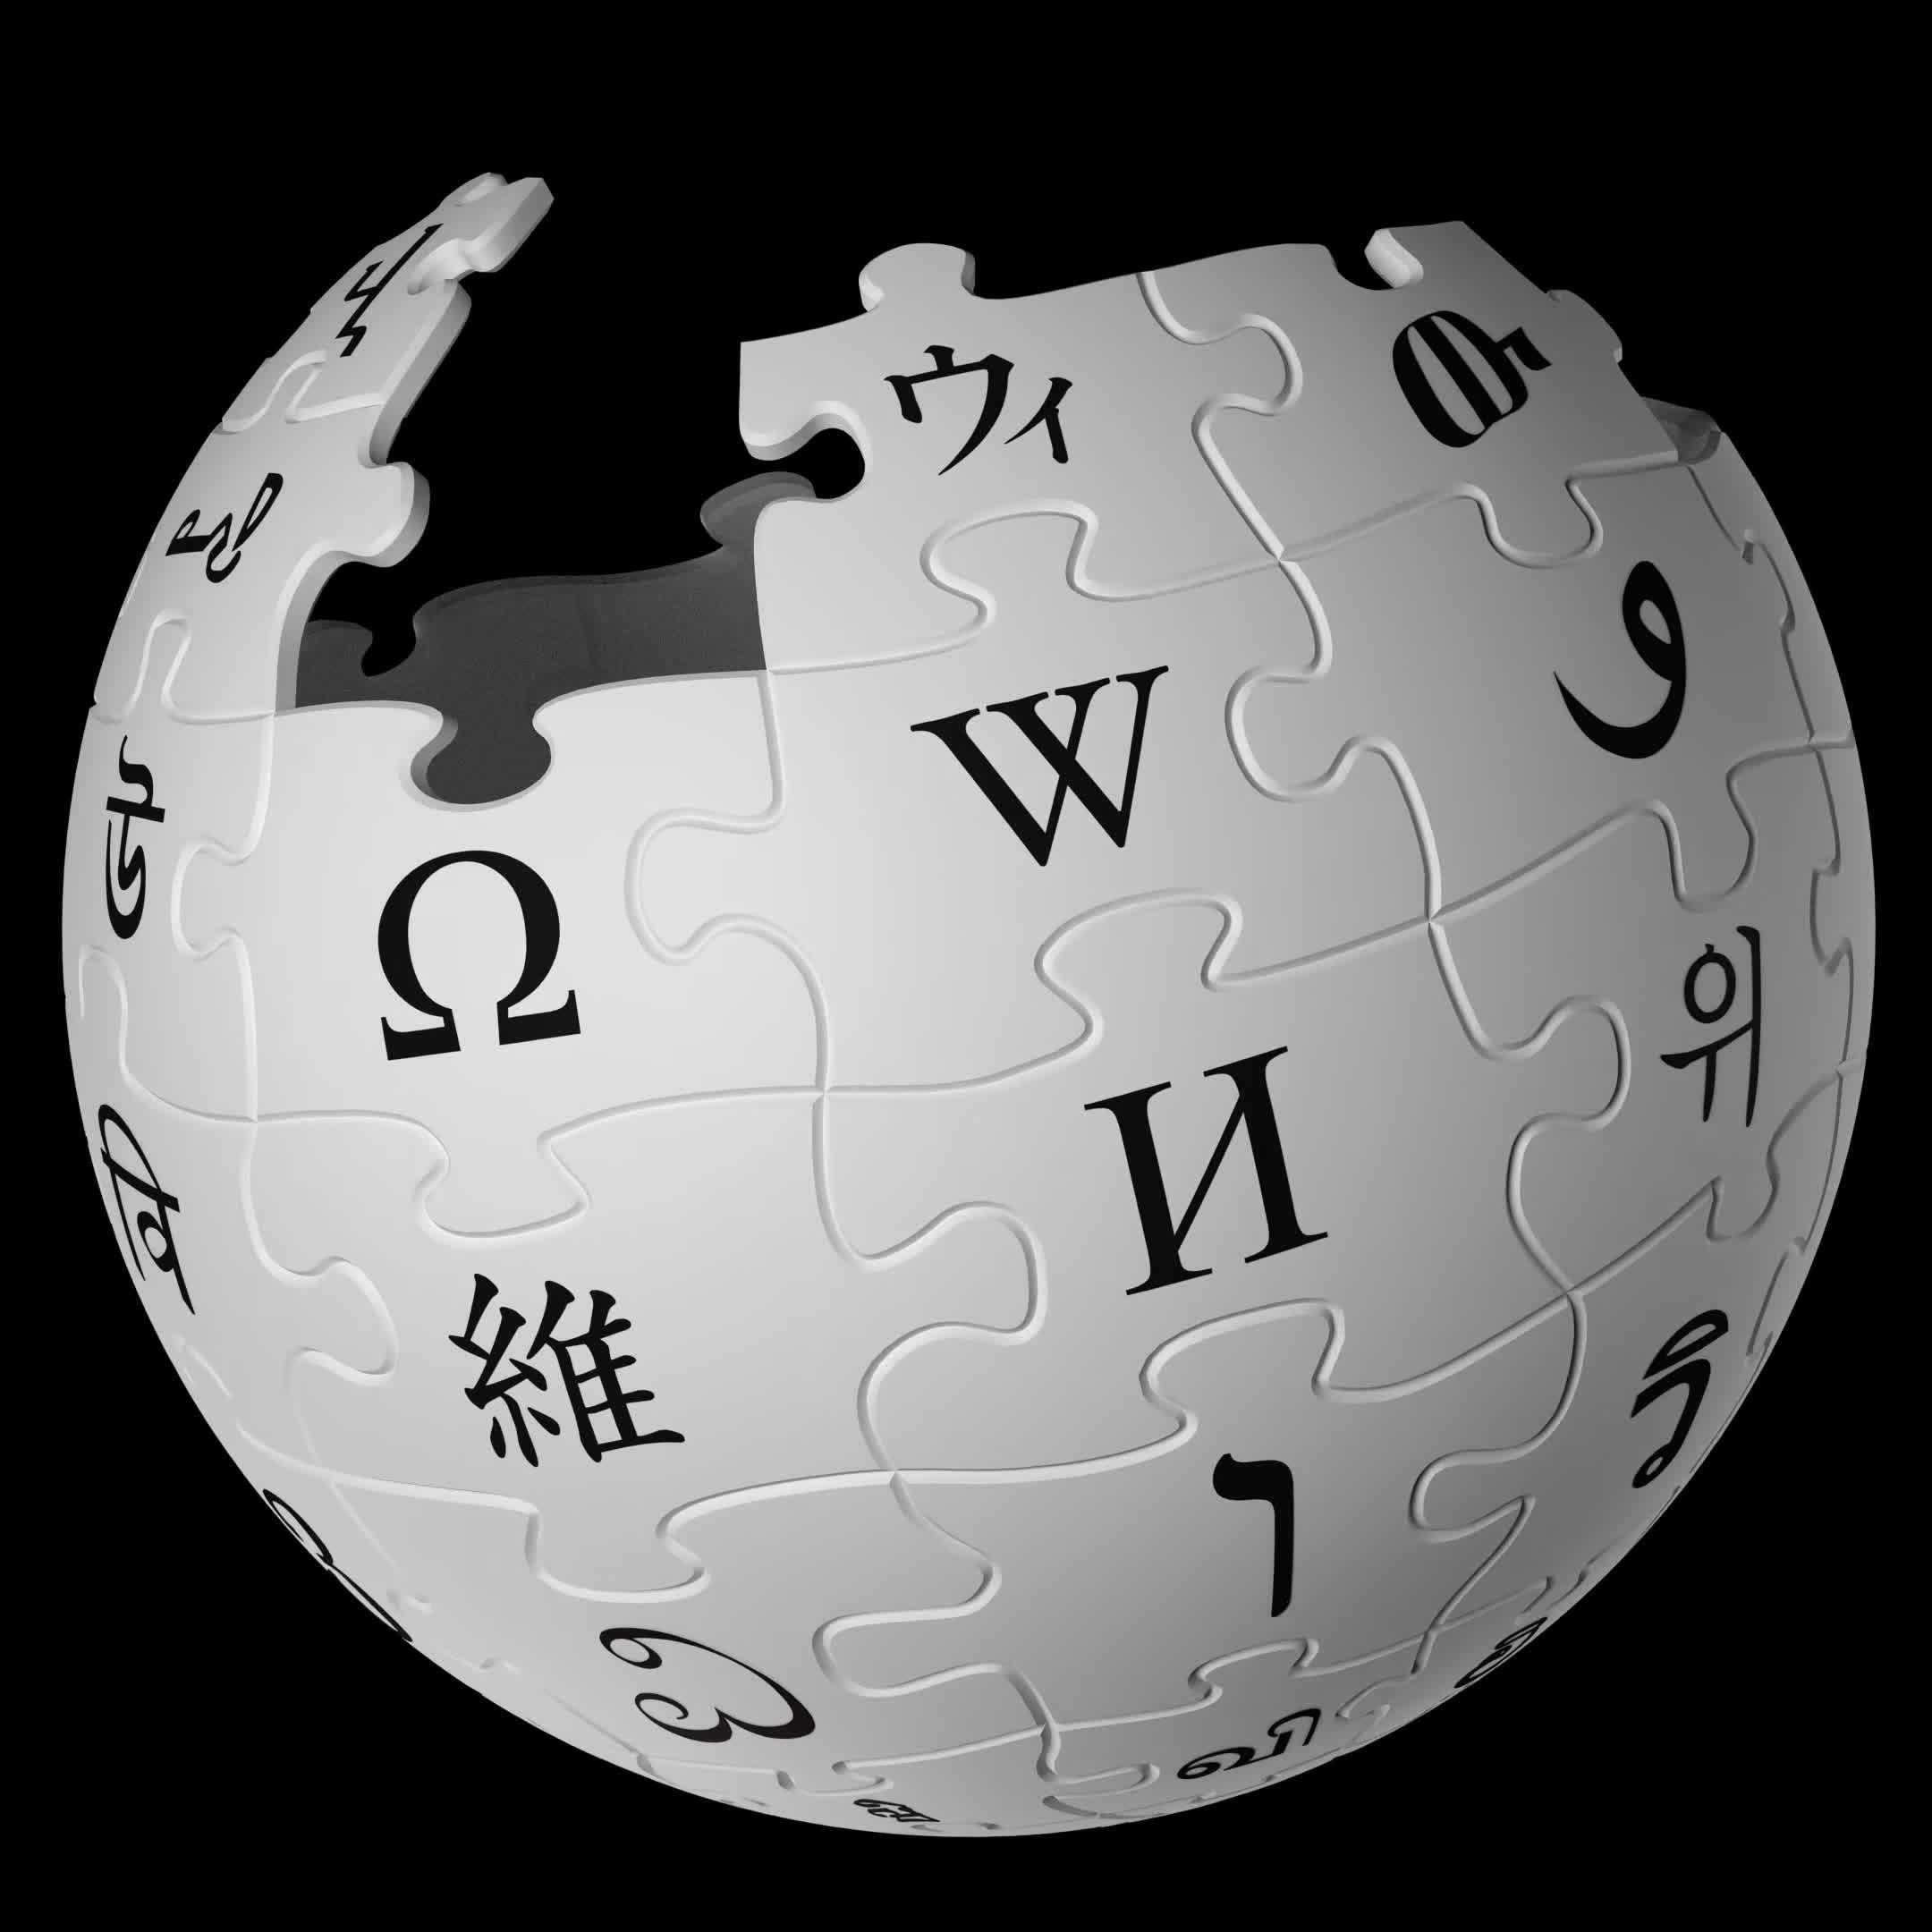 Puzzle Globe Logo - Wikipedia logo puzzle globe spins horizontally and vertically